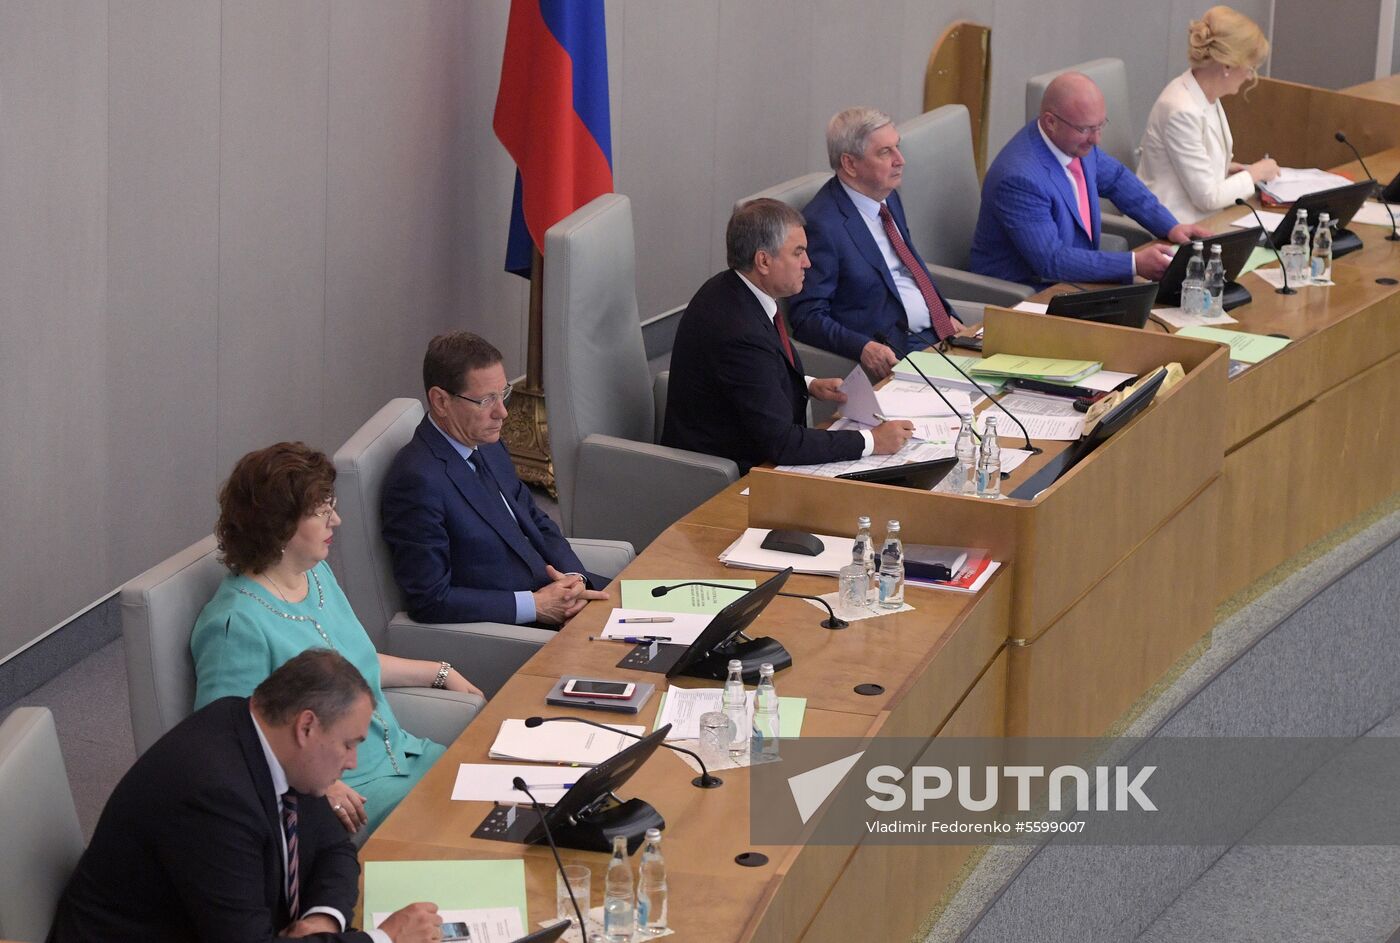 State Duma plenary meeting closing spring session